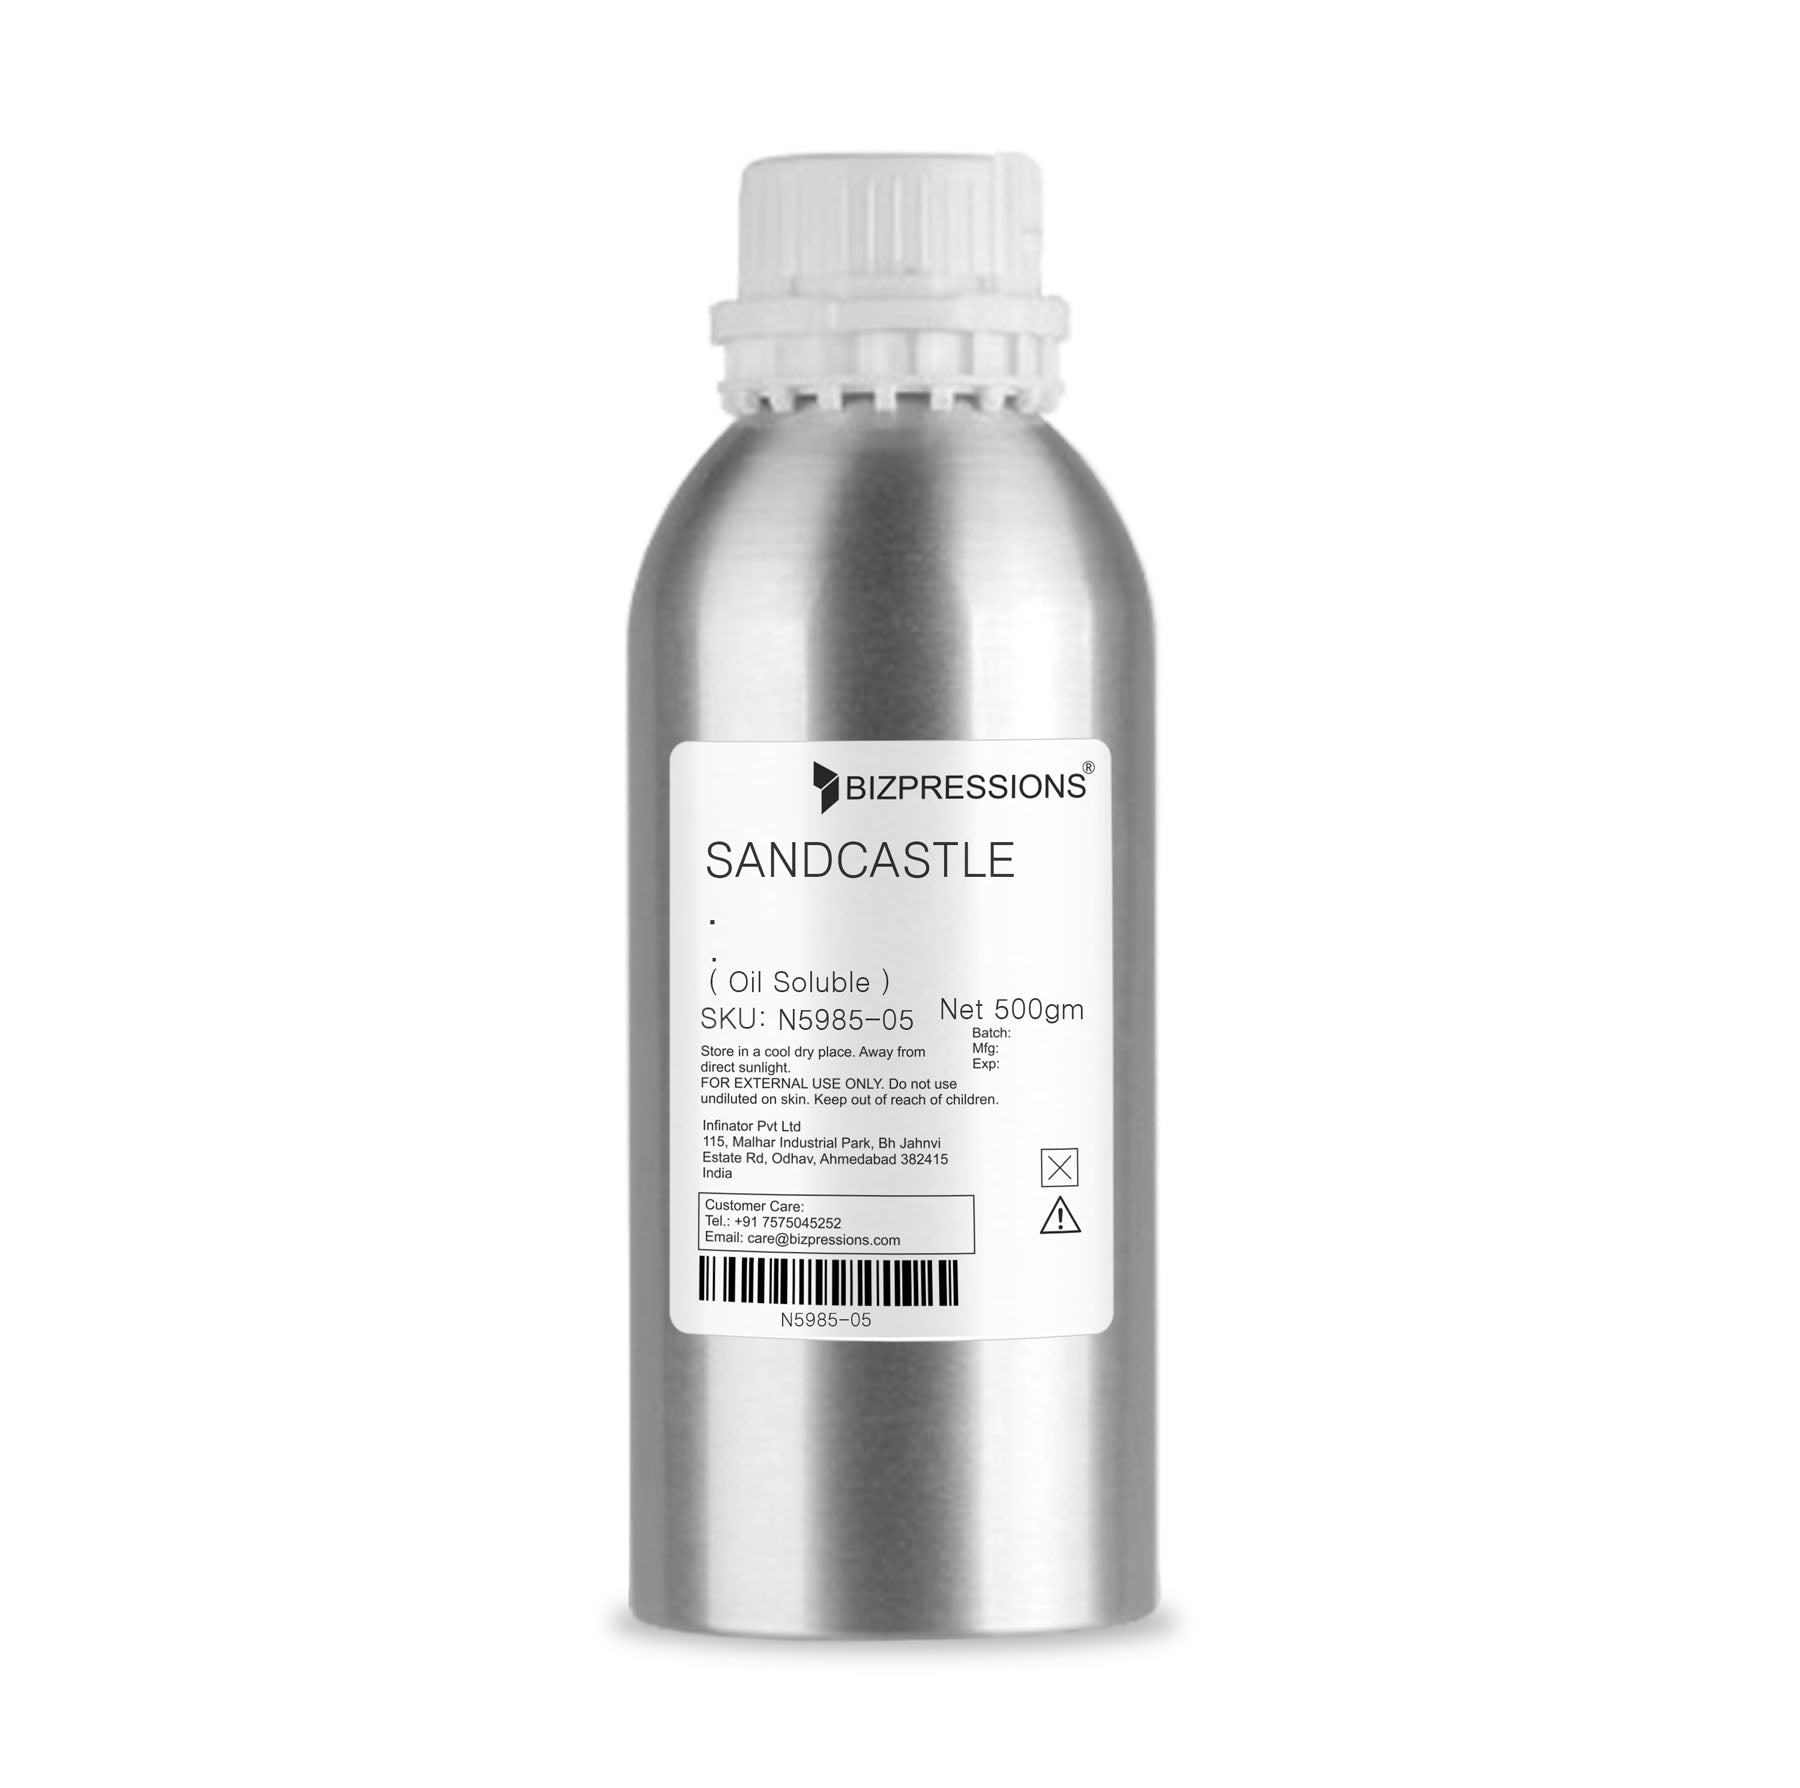 SANDCASTLE - Fragrance ( Oil Soluble ) - 500 gm